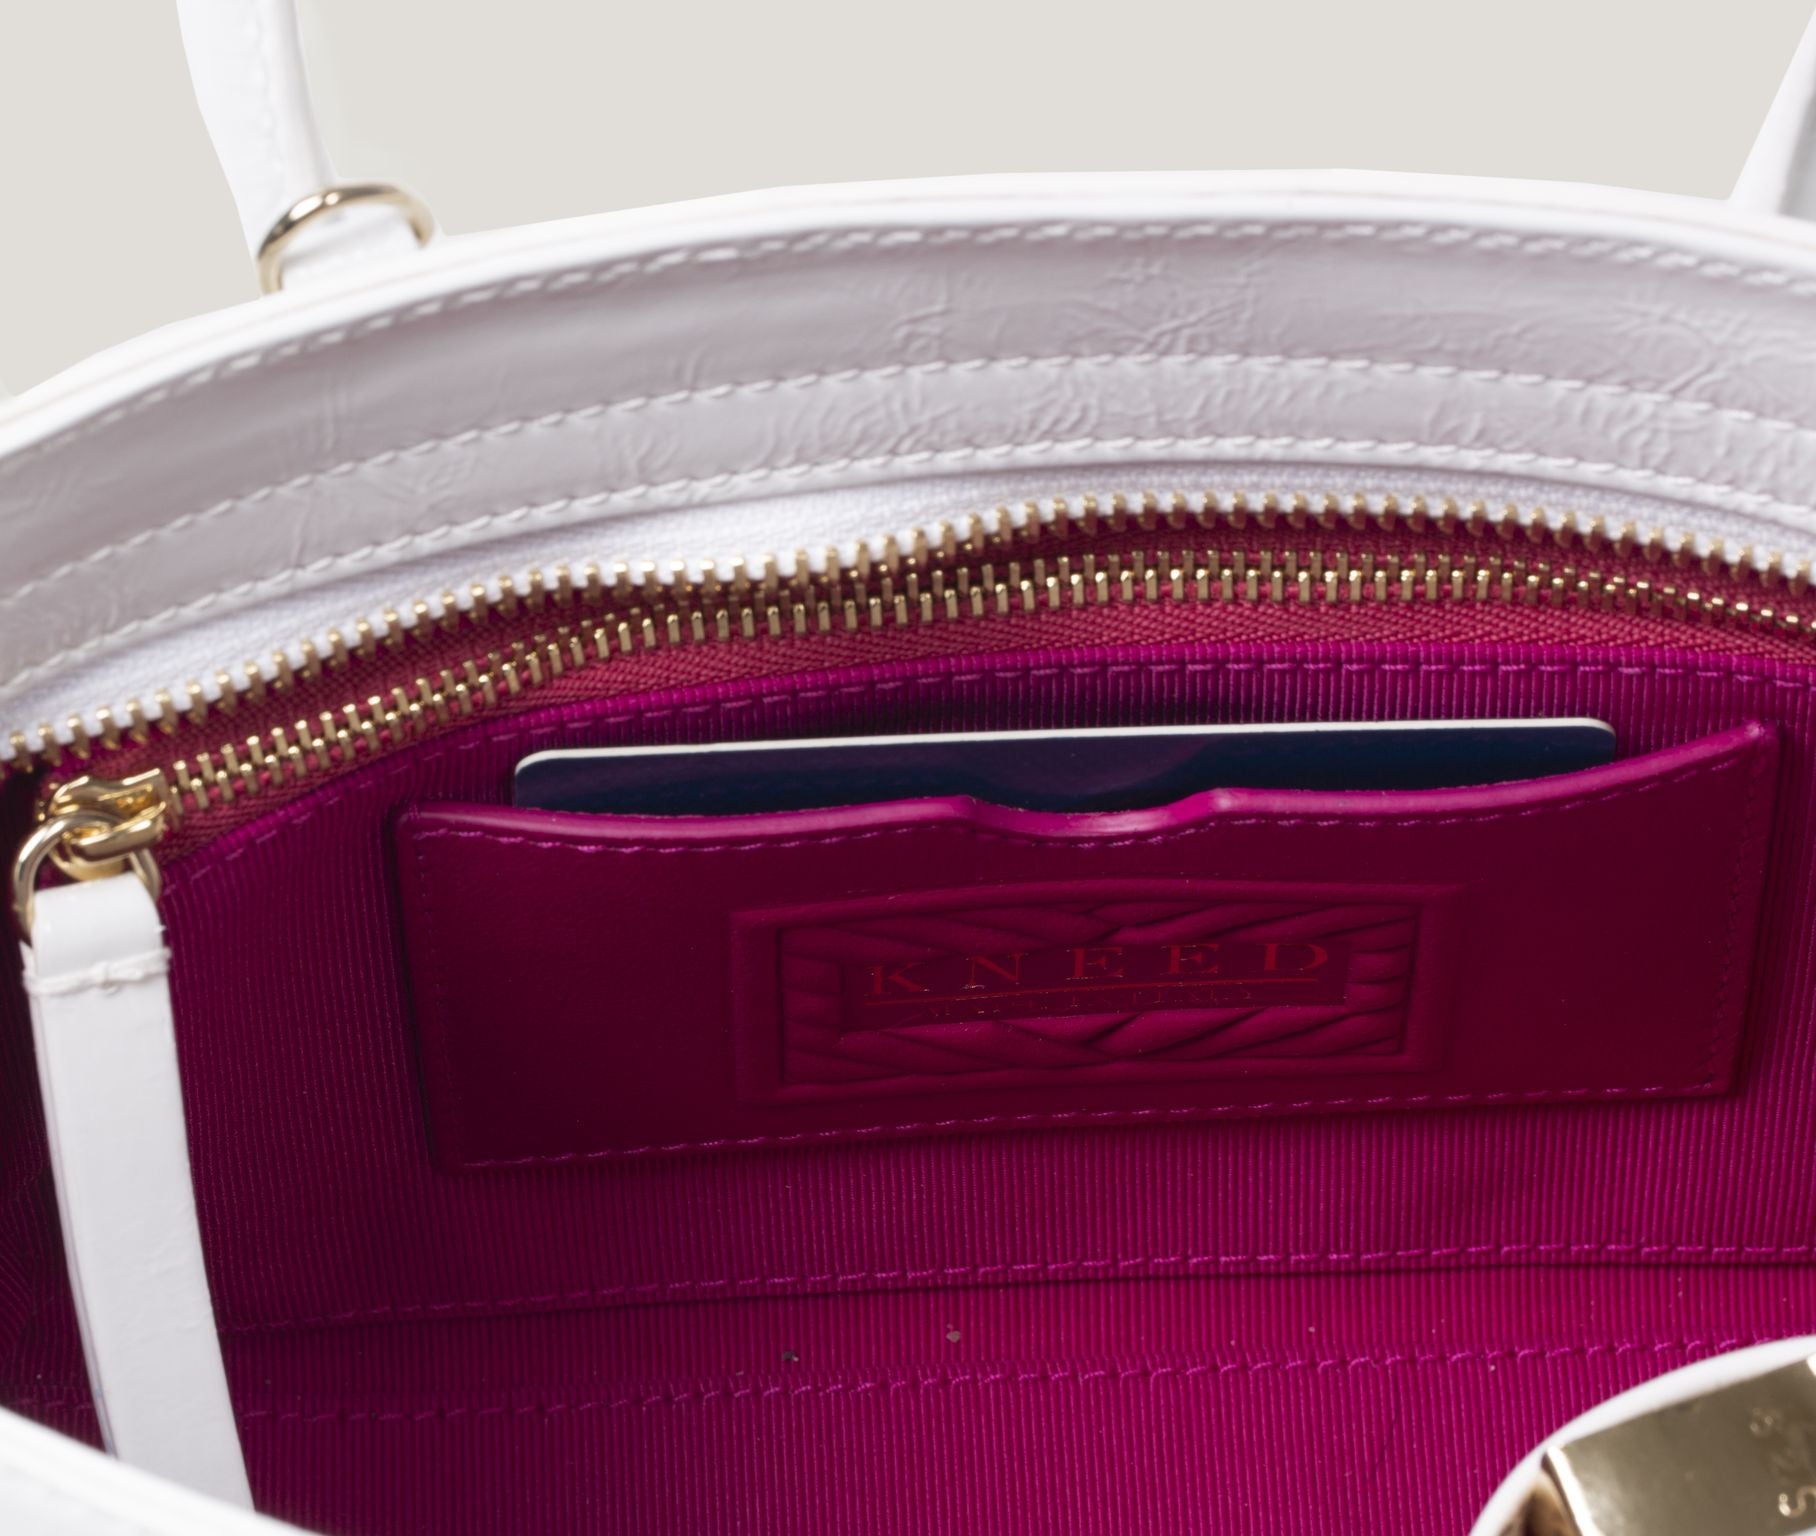 Handcrafted details, Italian luxury handbags